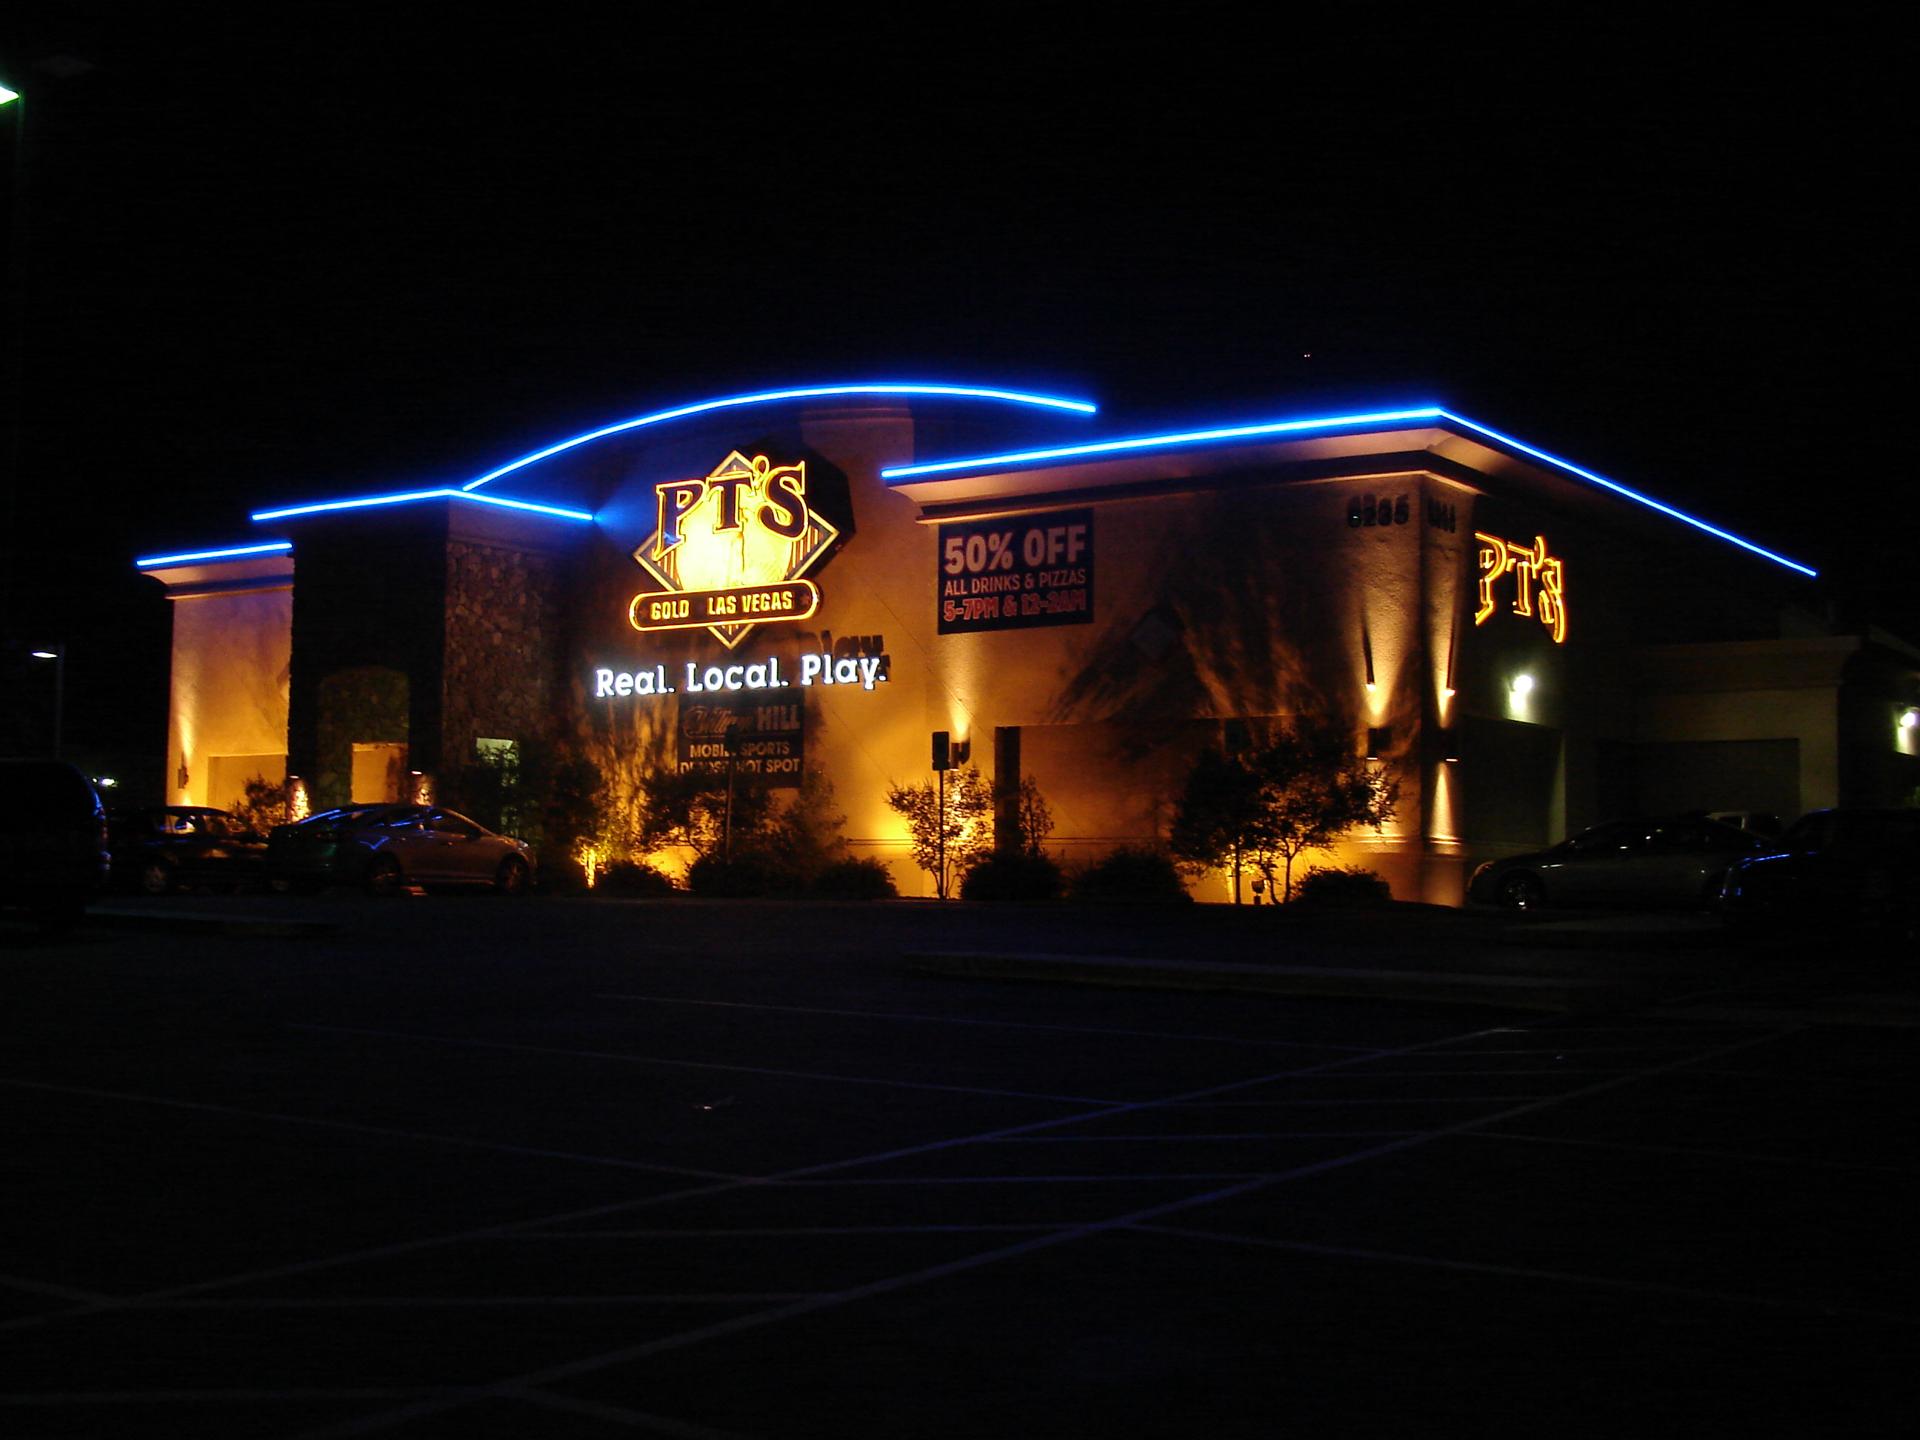 PT'S Casino - Blue Laser